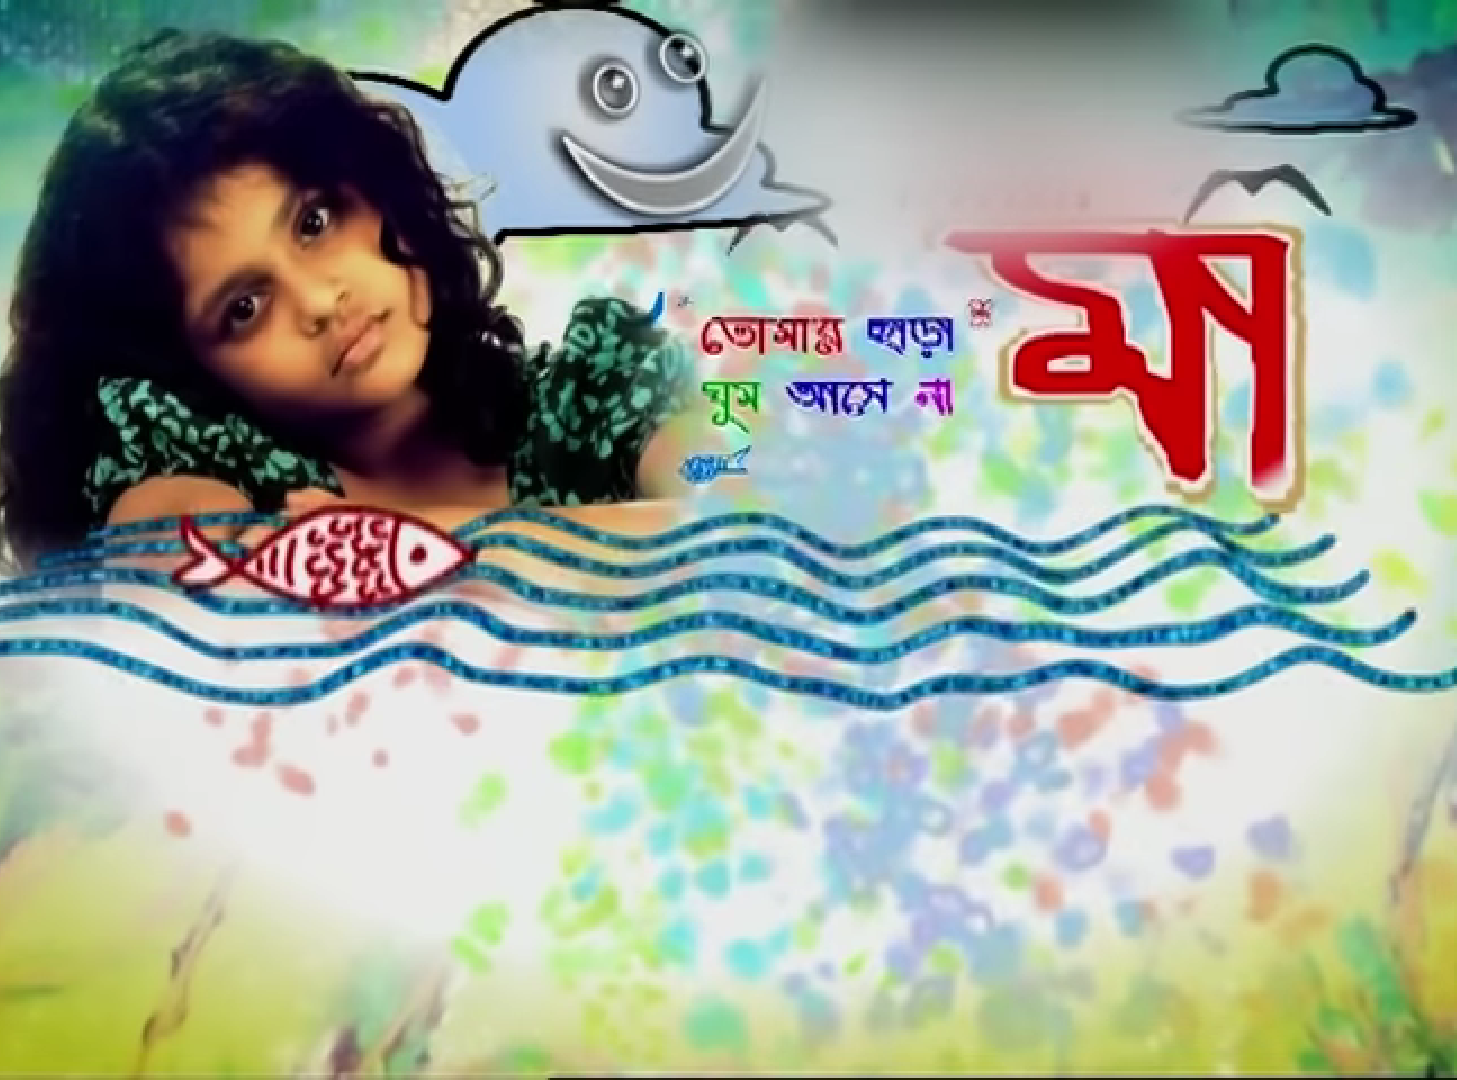 Bengali Serial,বাংলা সিরিয়াল,Star Jalsha,স্টার জলসা,Maa,মা,Jhilik,ঝিলিক,Comeback,কামব্যাক